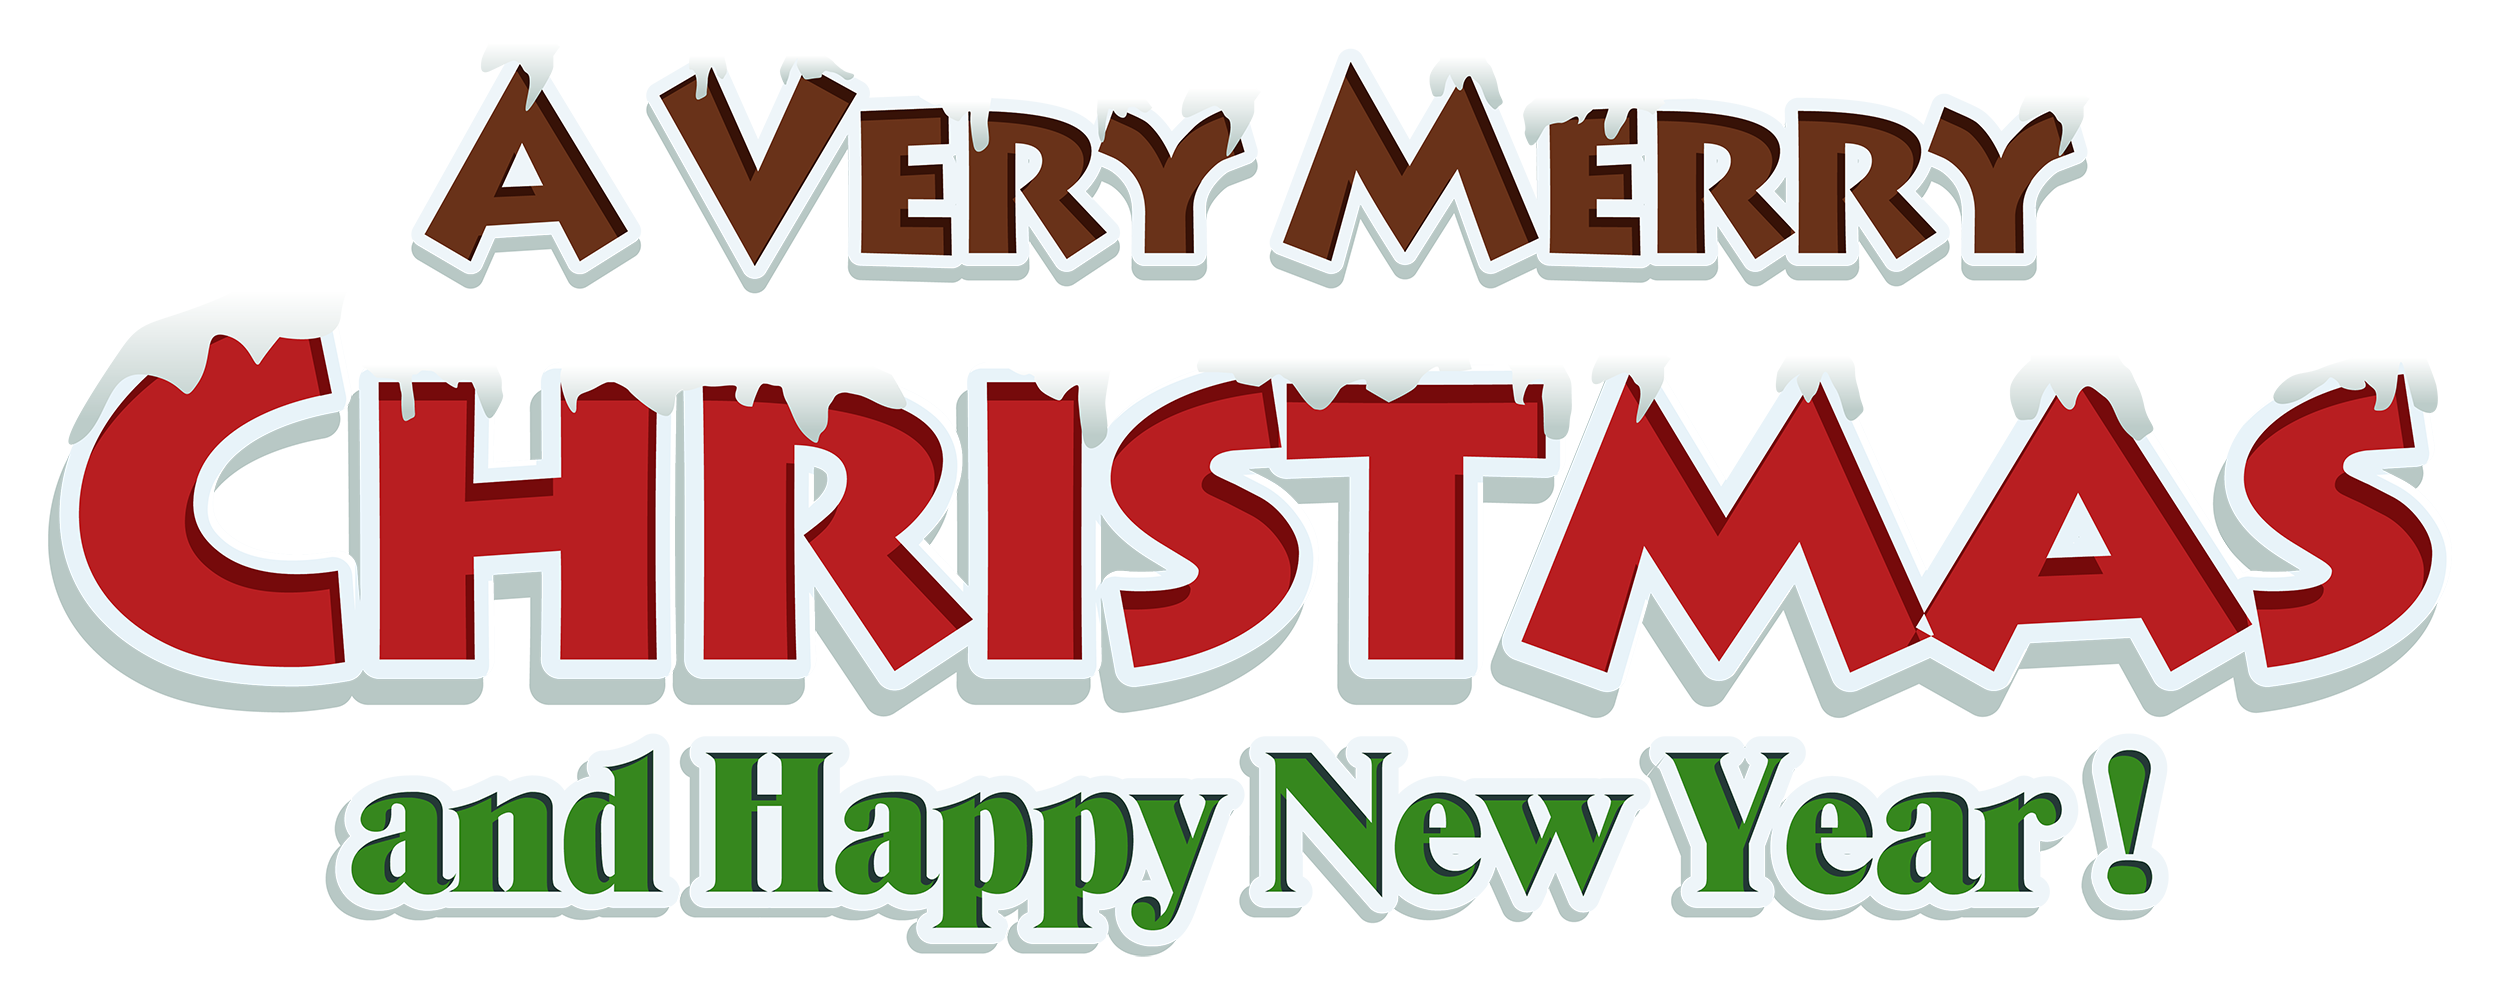 Merry Christmas Word Art PNG HD Image